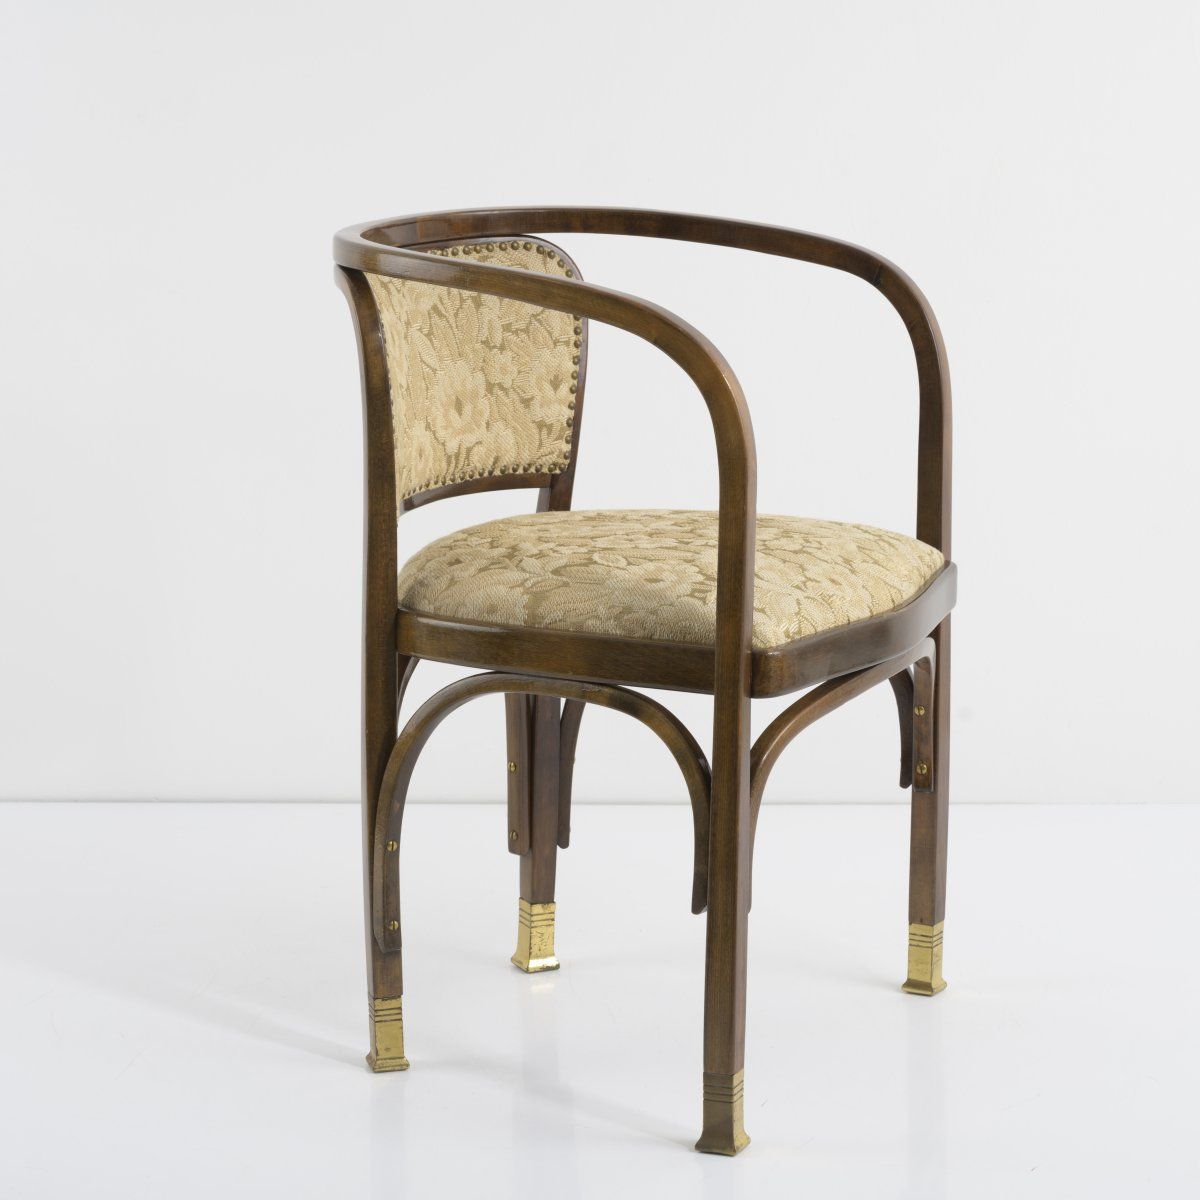 Null Gustav Siegel, '715F' armchair, c. 1899, H. 77 x 53.5 x 52 cm. Made by J. &&hellip;